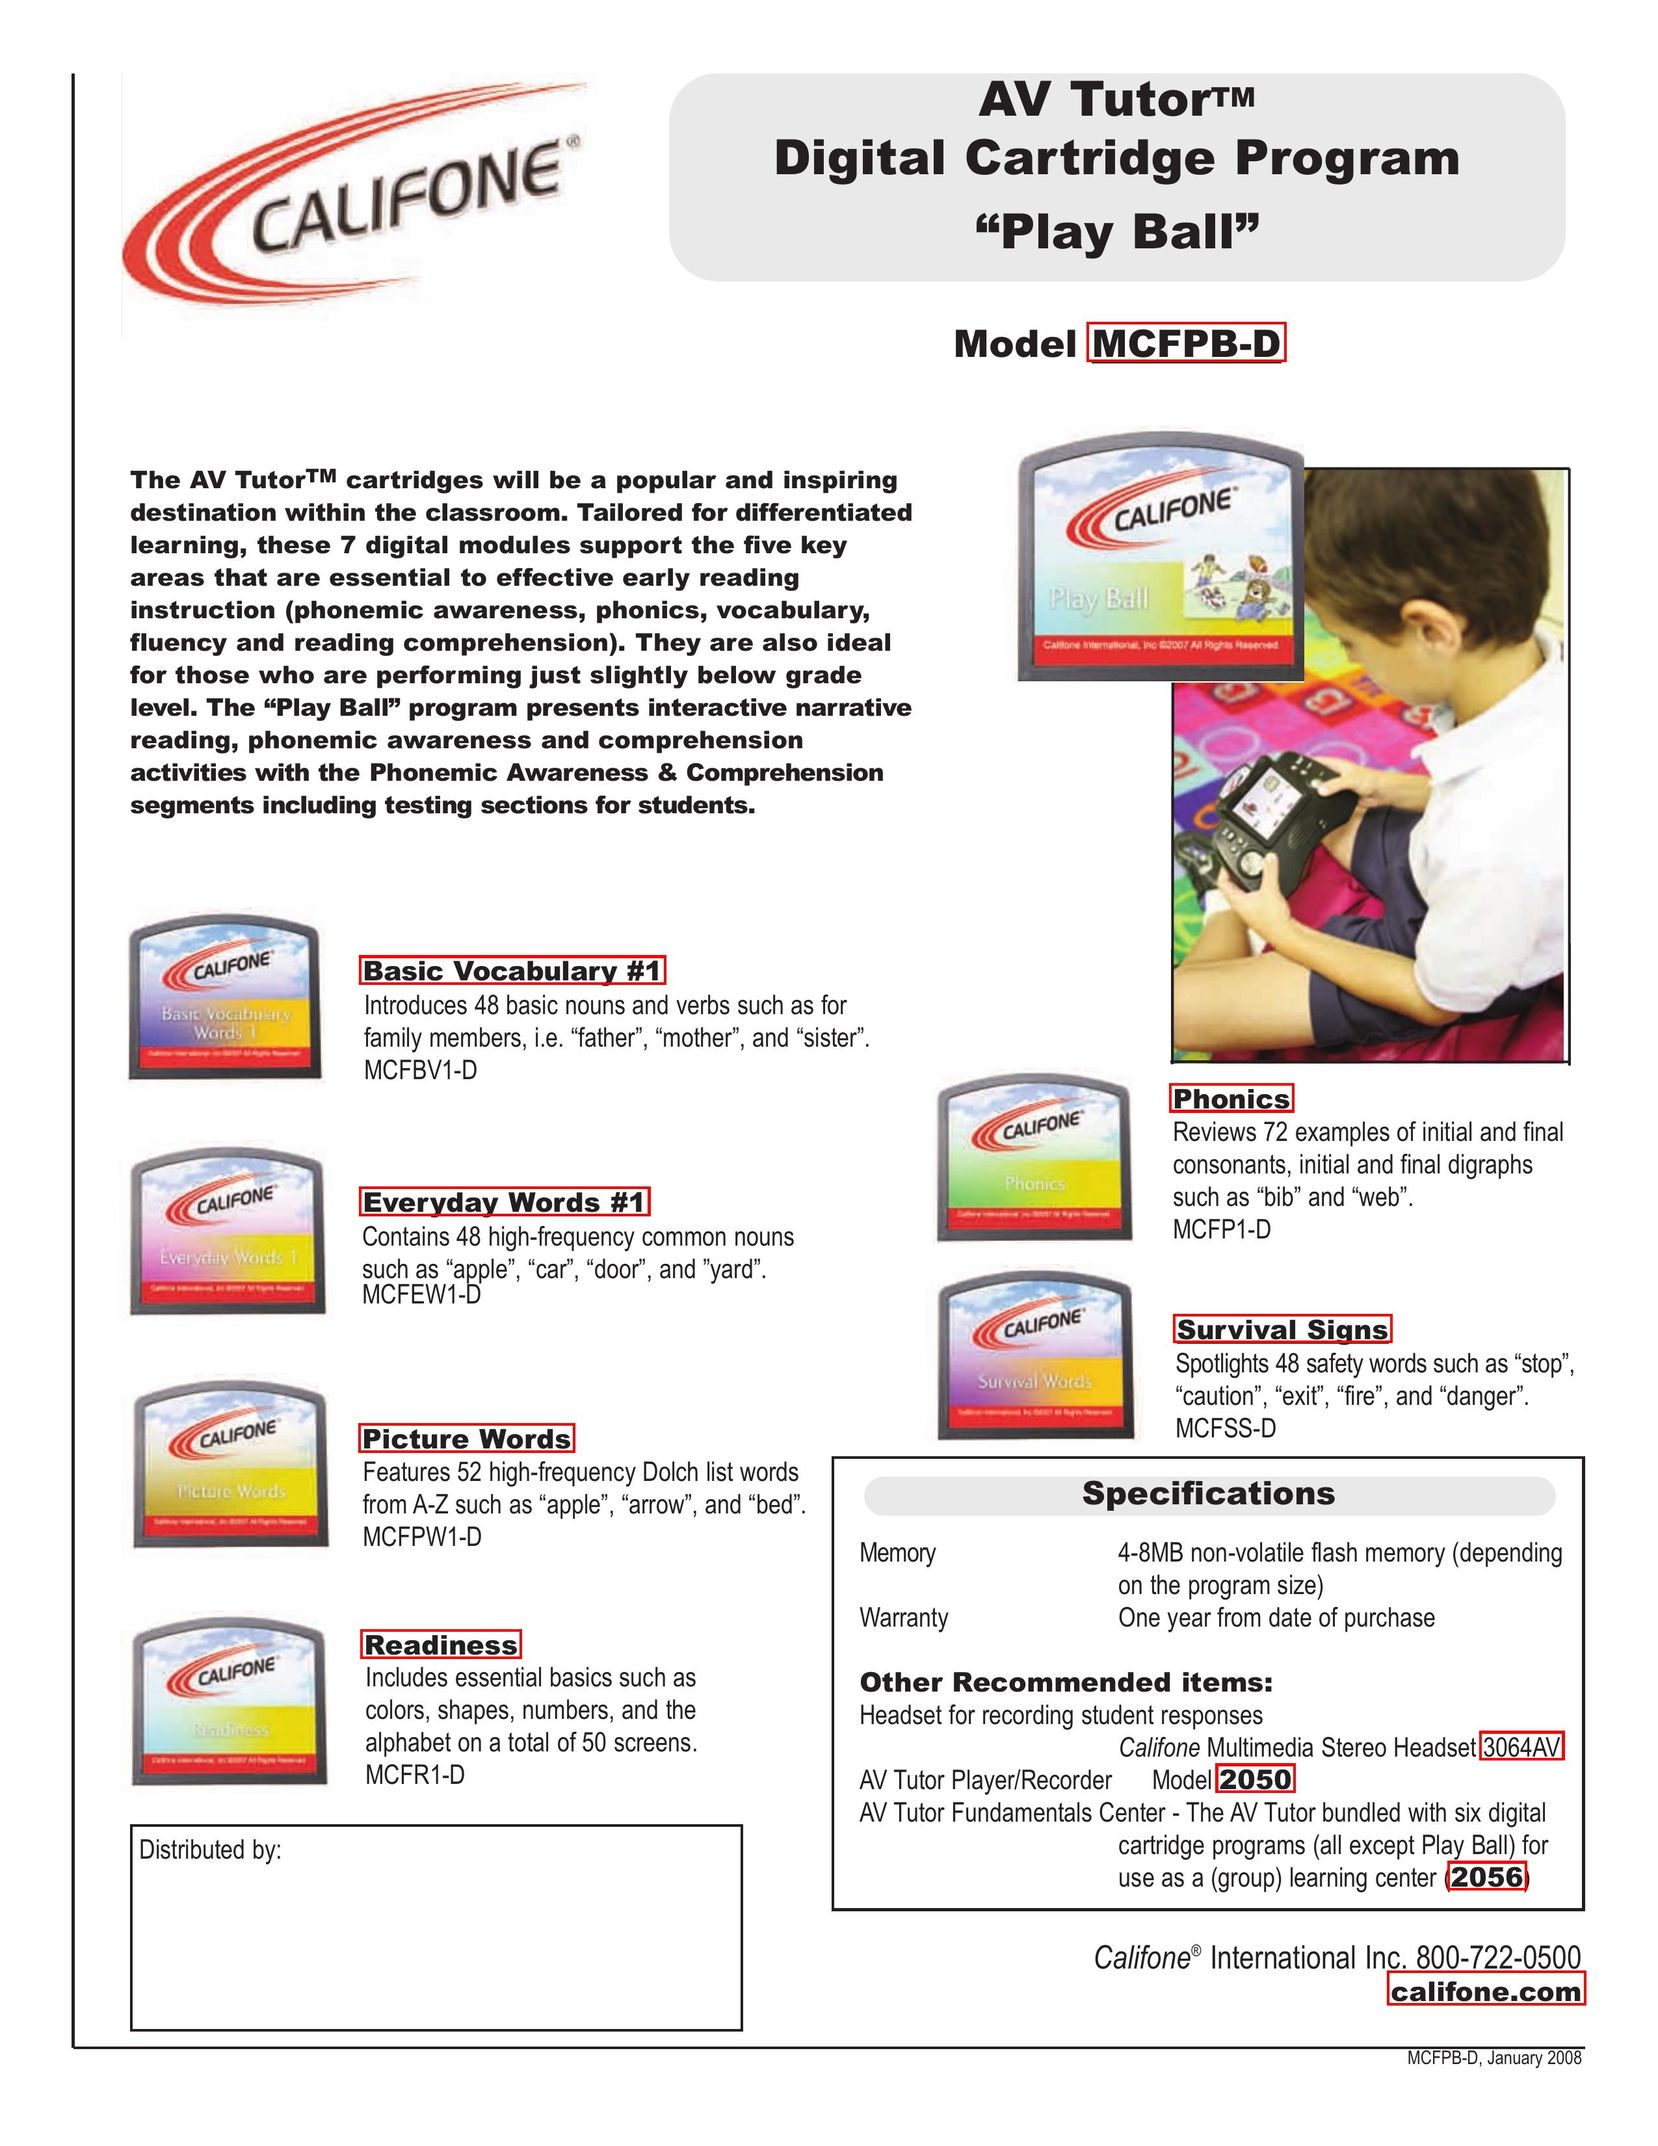 Califone MCFP1-D Video Game Controller User Manual